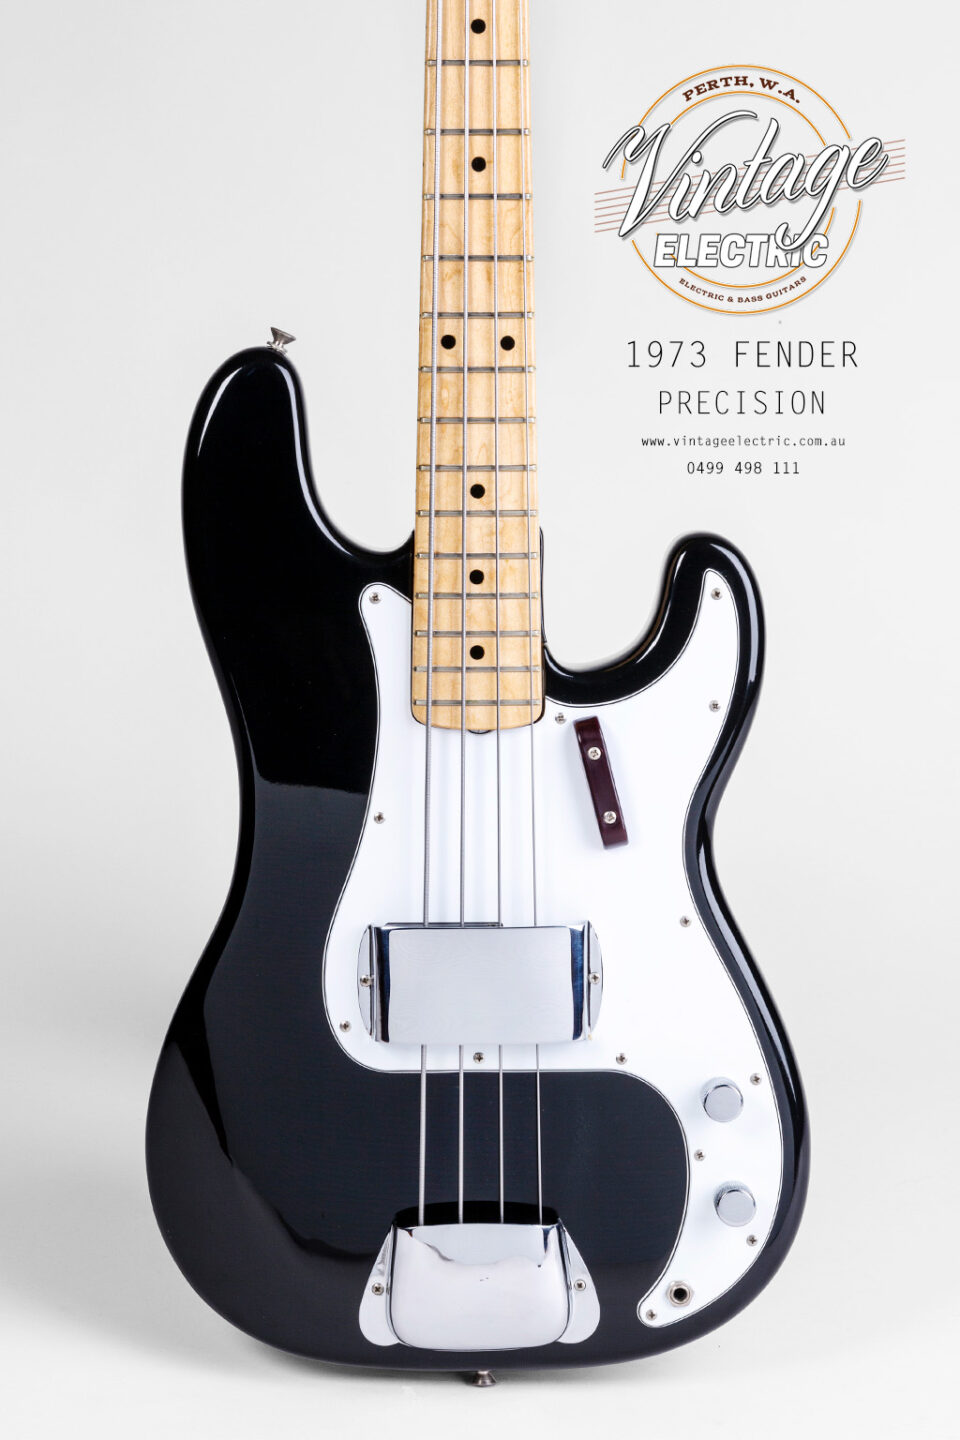 1973 Fender Precision Black Body